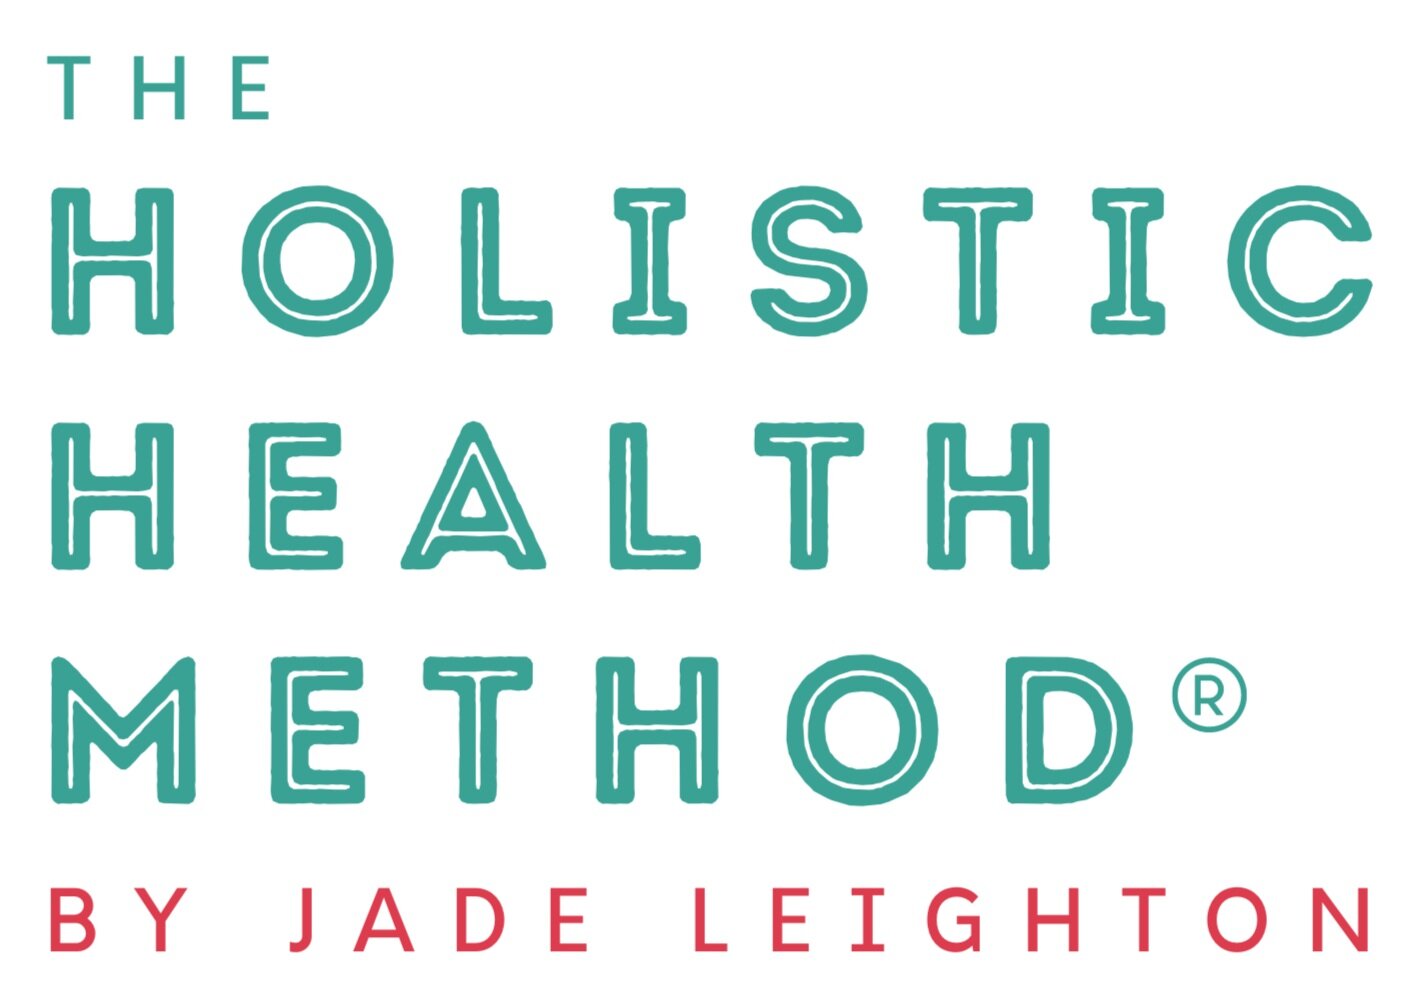 The Holistic Health Method